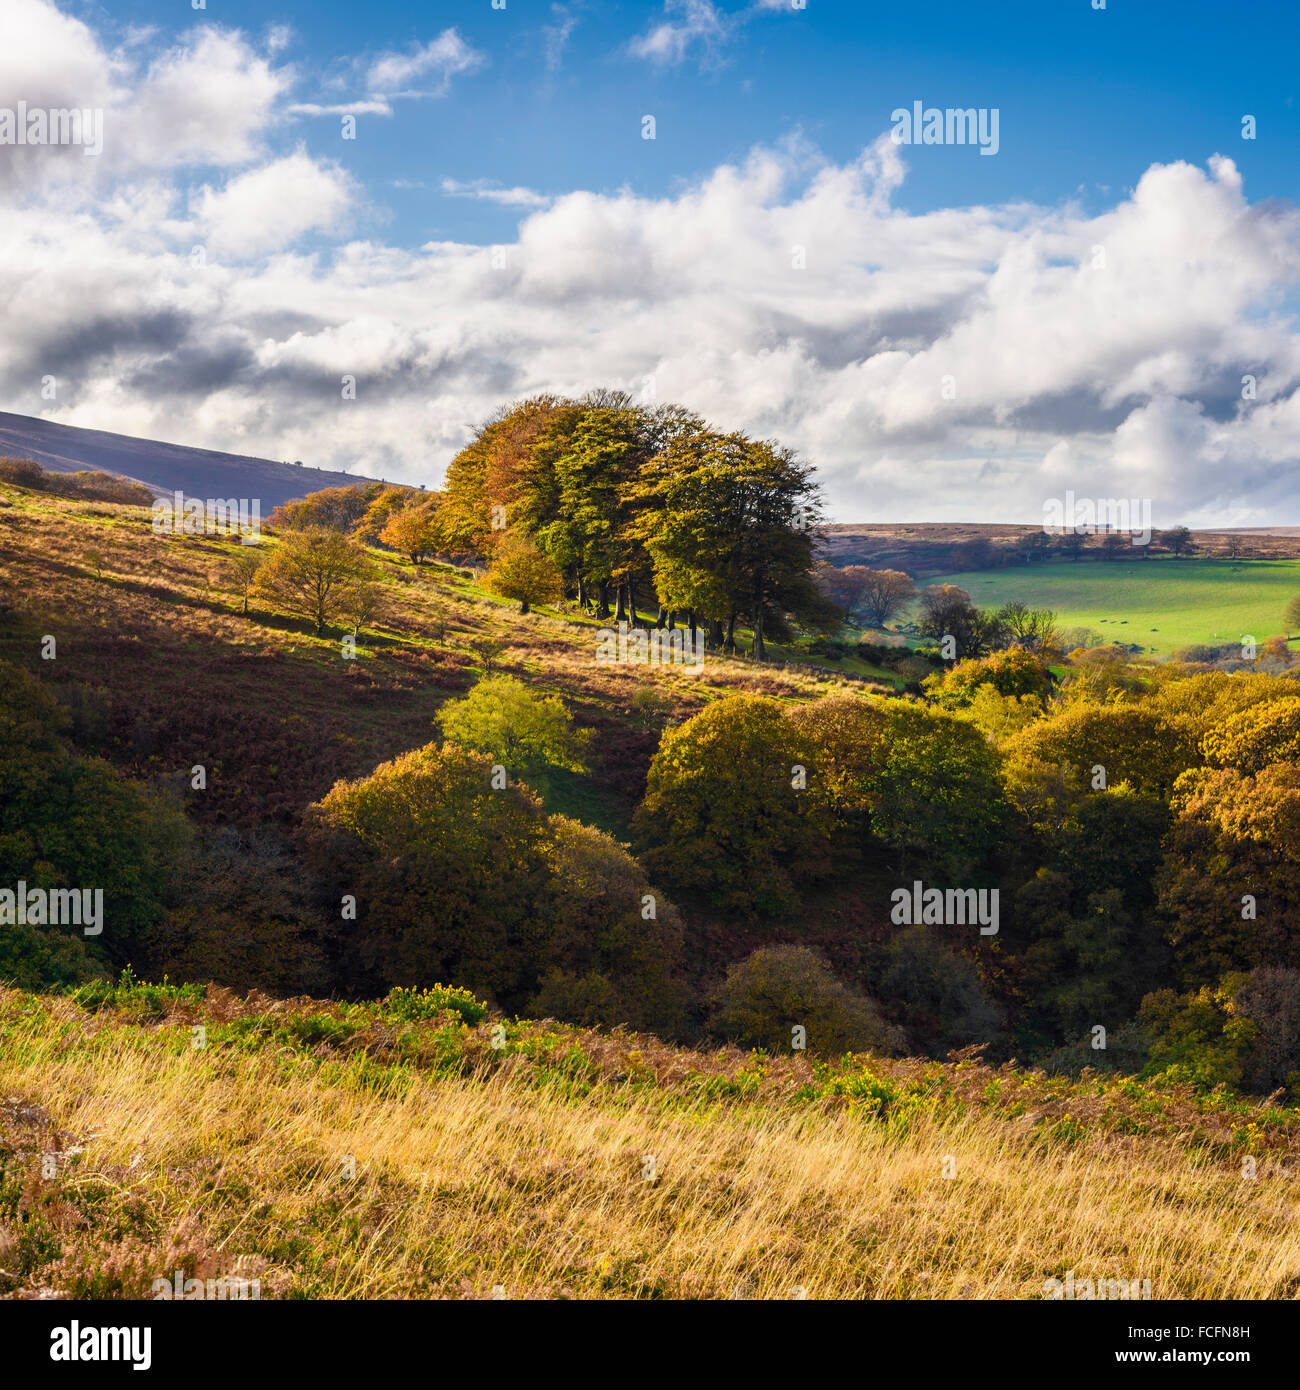 Colores del Otoño en la colina Dunkery en Exmoor National Park, Somerset, Inglaterra Foto de stock